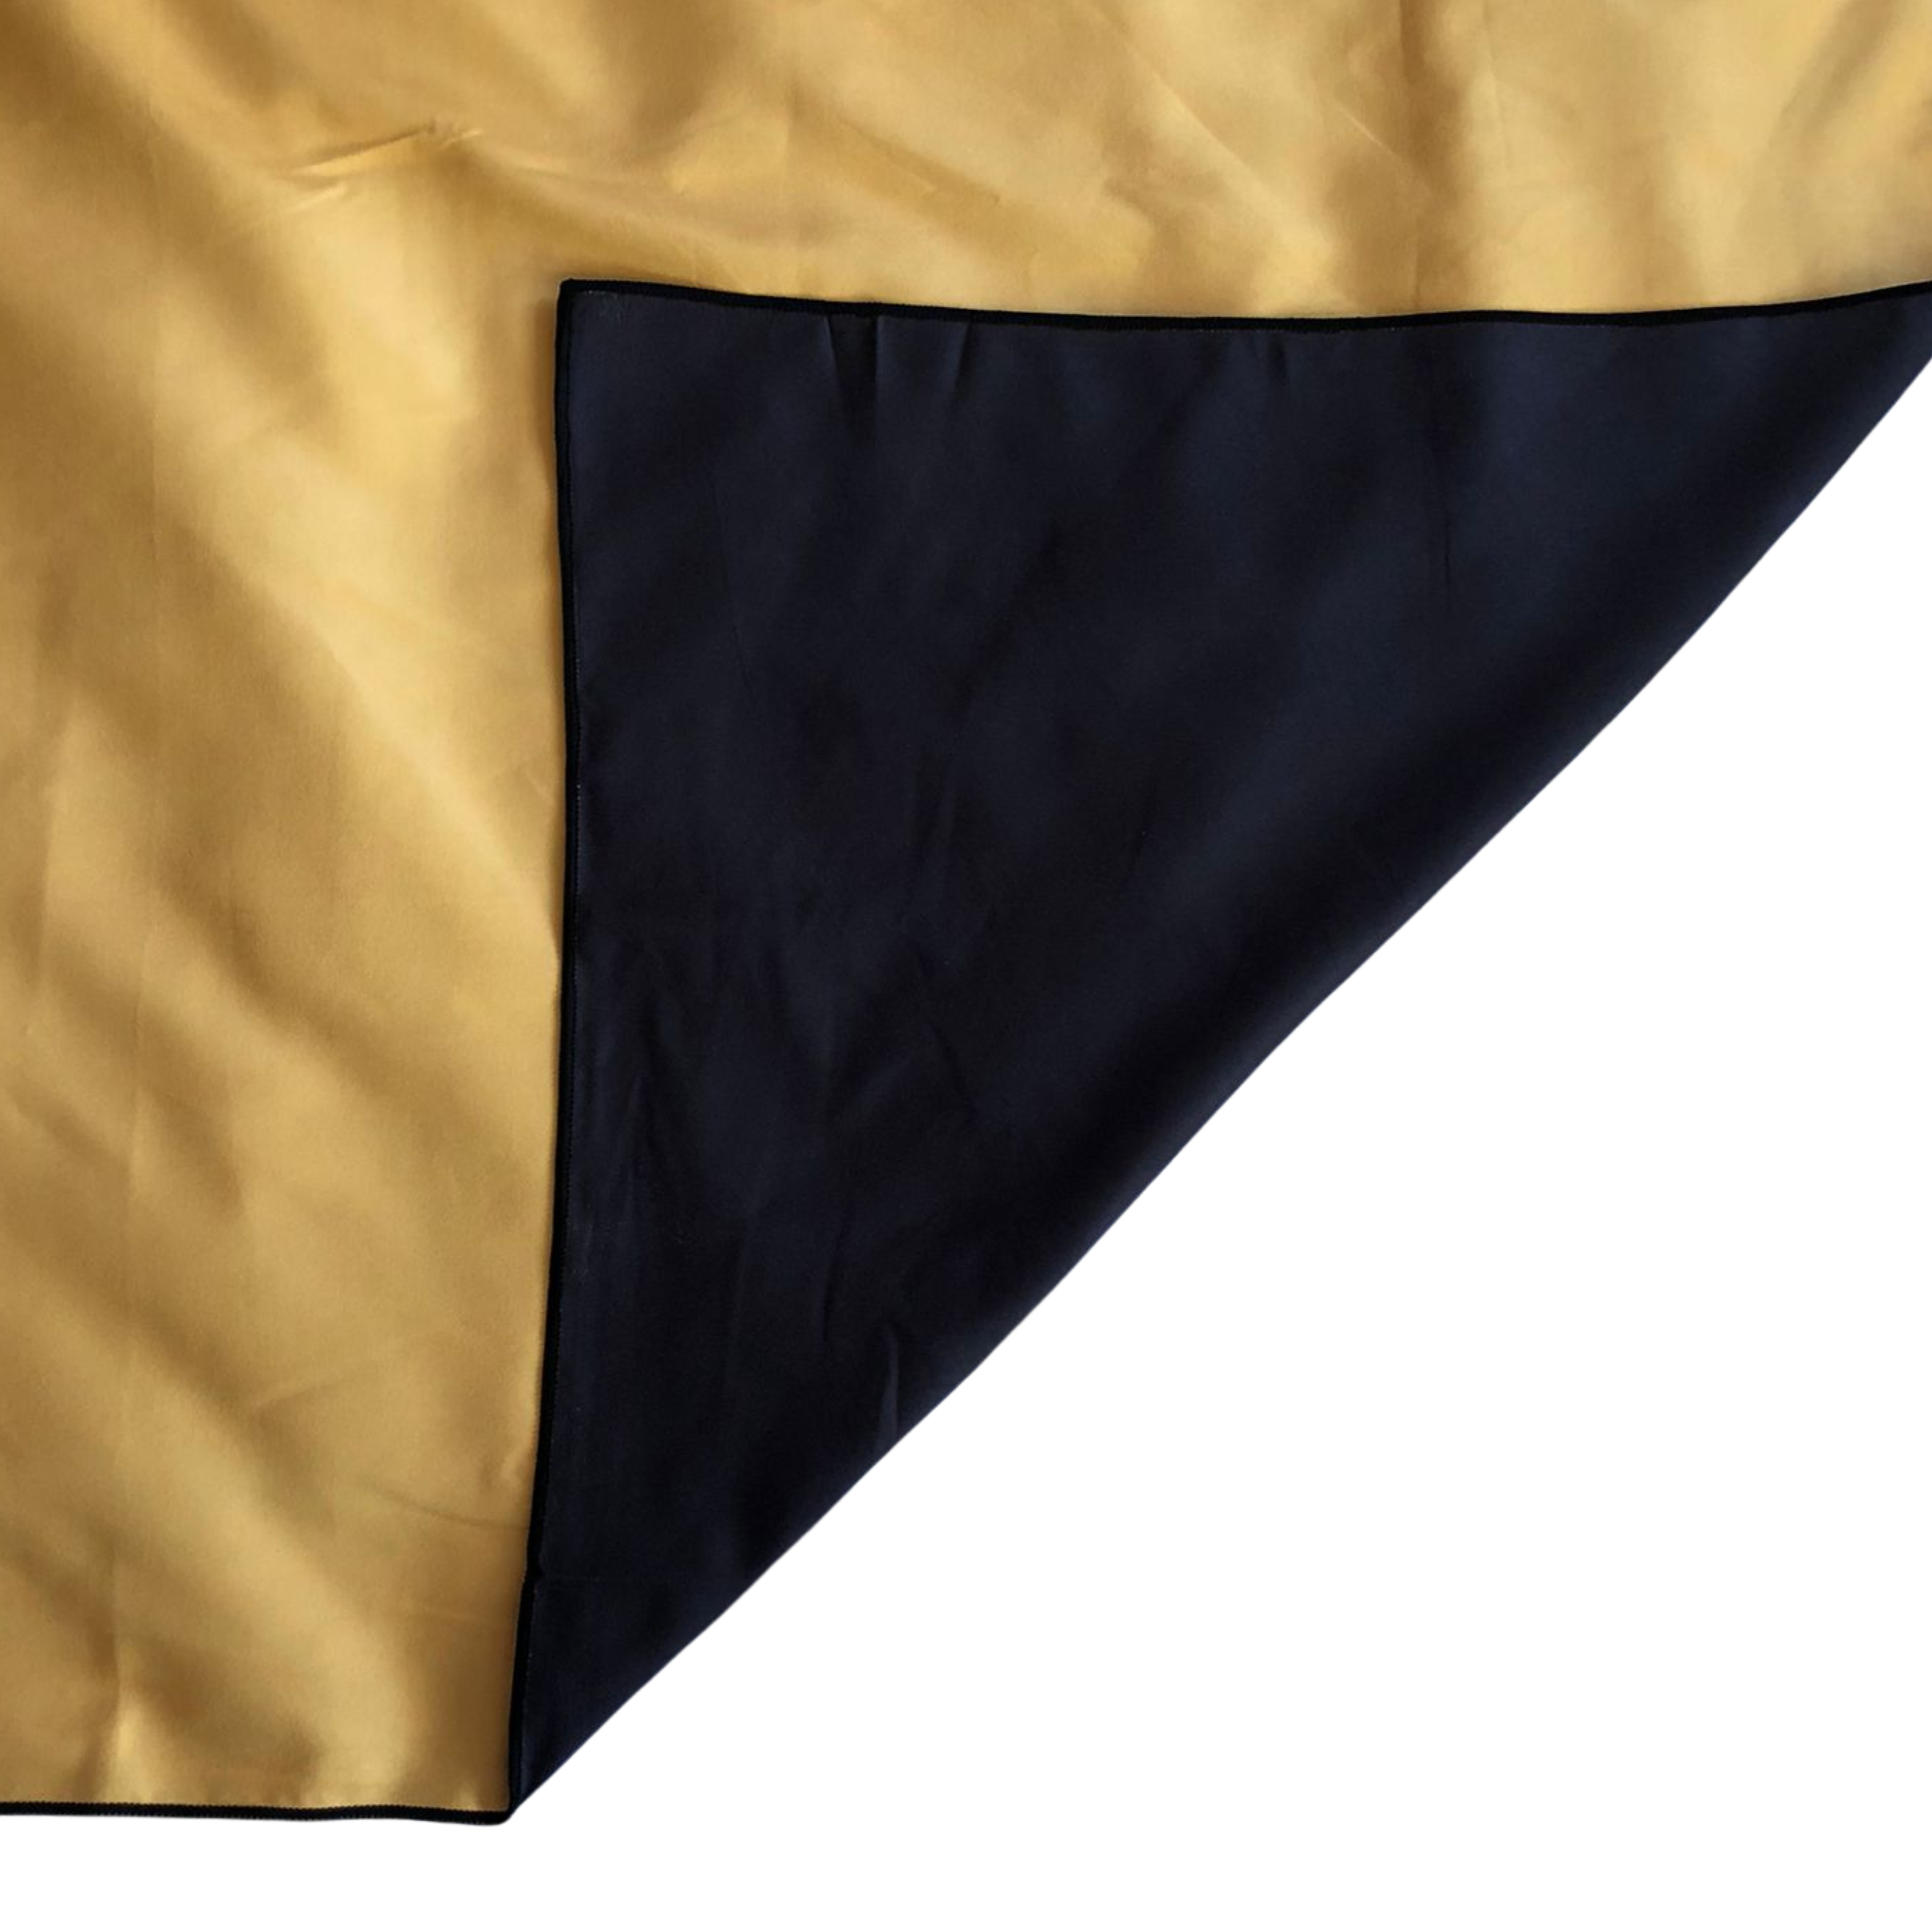 Sunburst Yellow Extra-Large Microfibre Towel